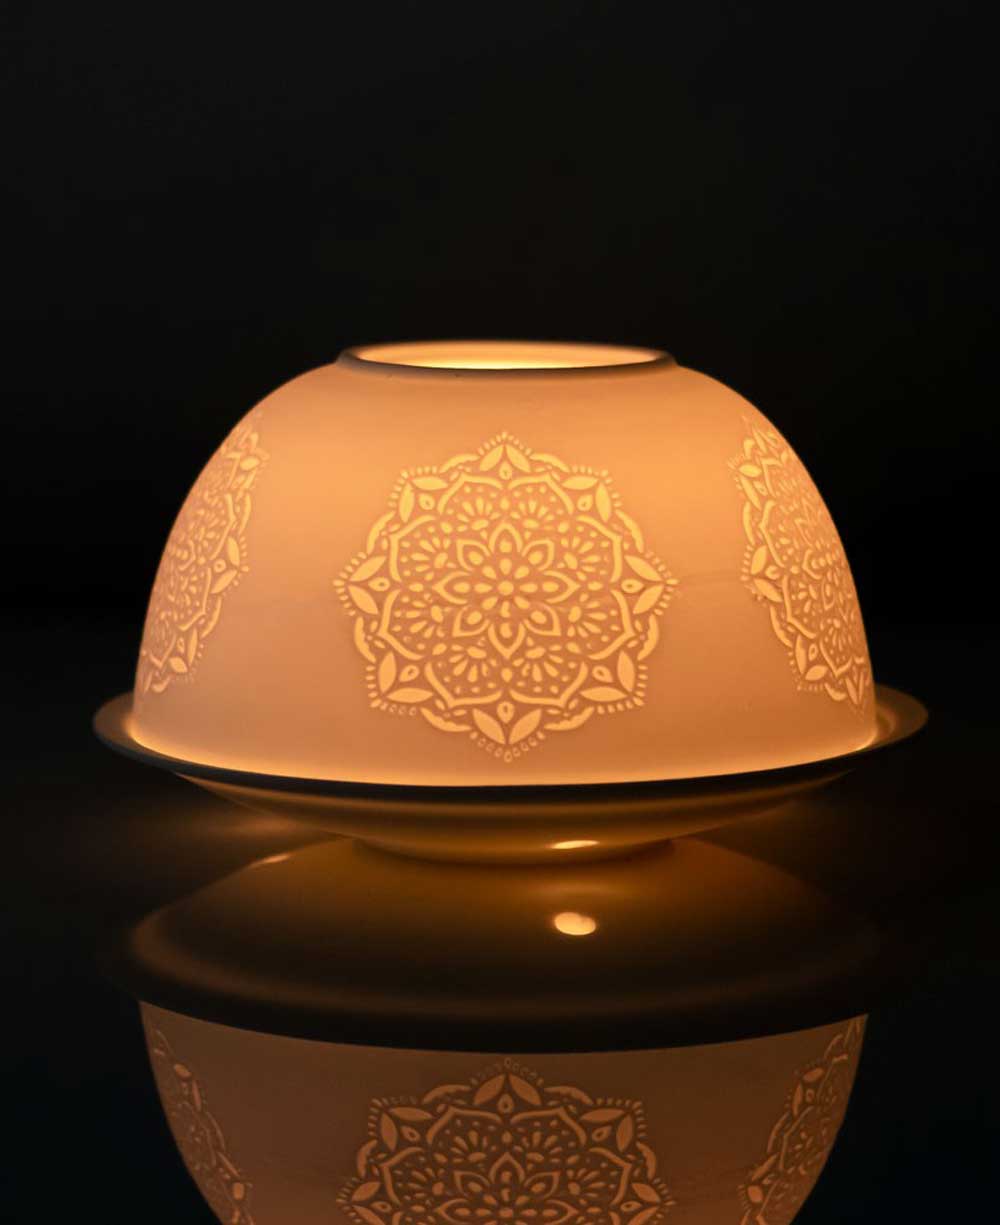 Mandala Dome Tealight Candle Holder Set of 2 - Candle Holders